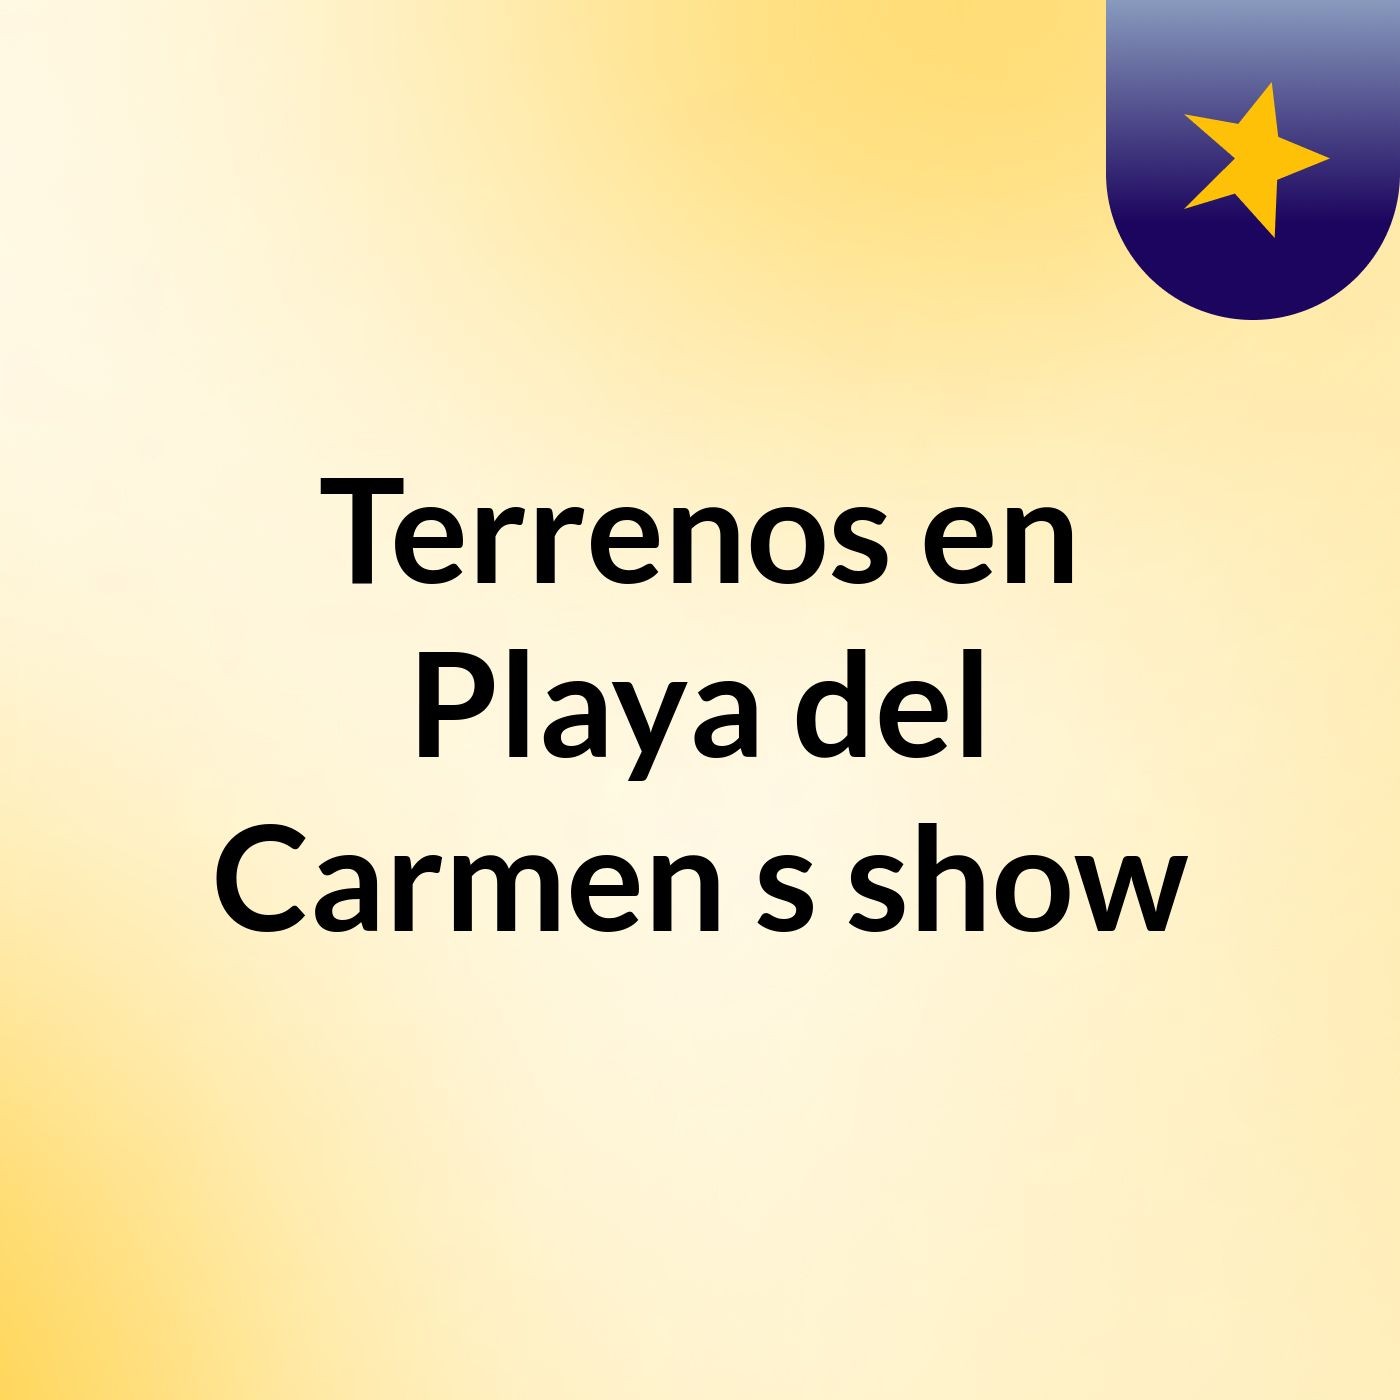 Terrenos en Playa del Carmen's show